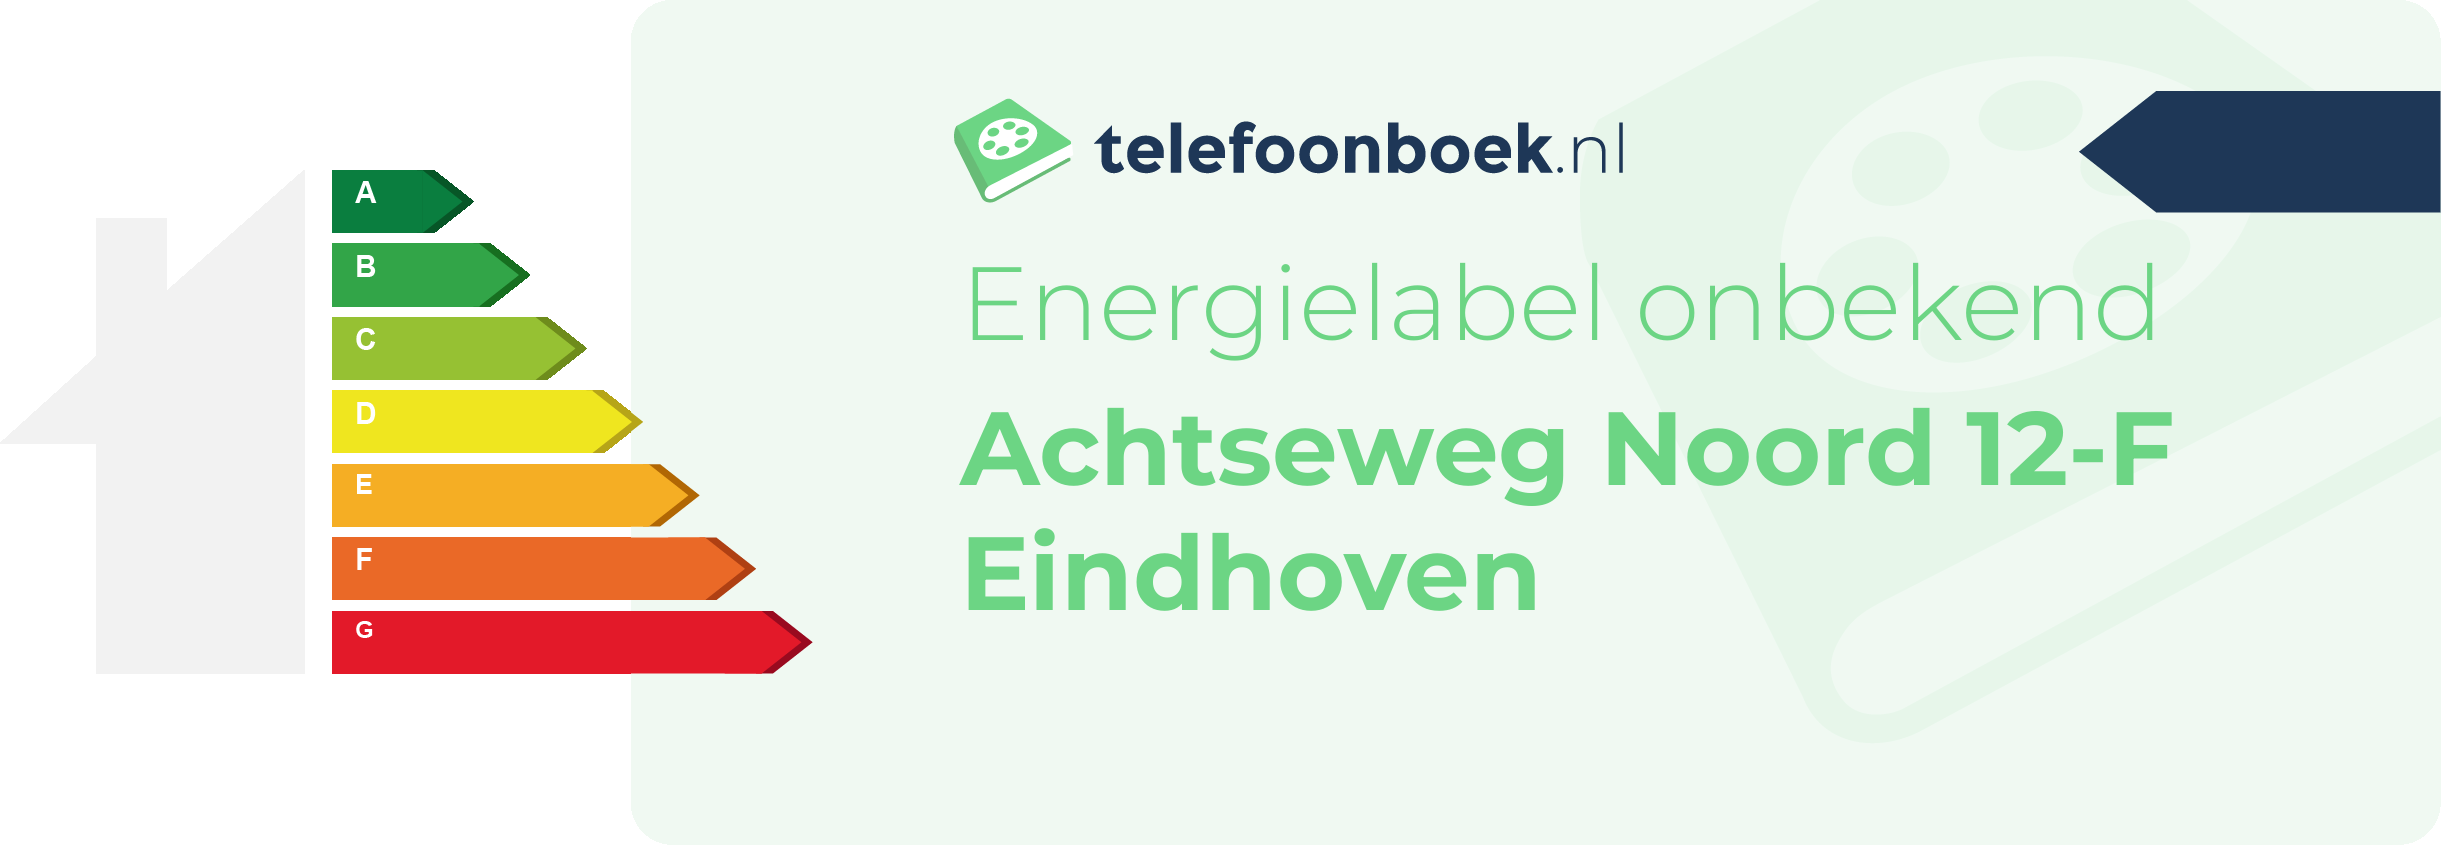 Energielabel Achtseweg Noord 12-F Eindhoven